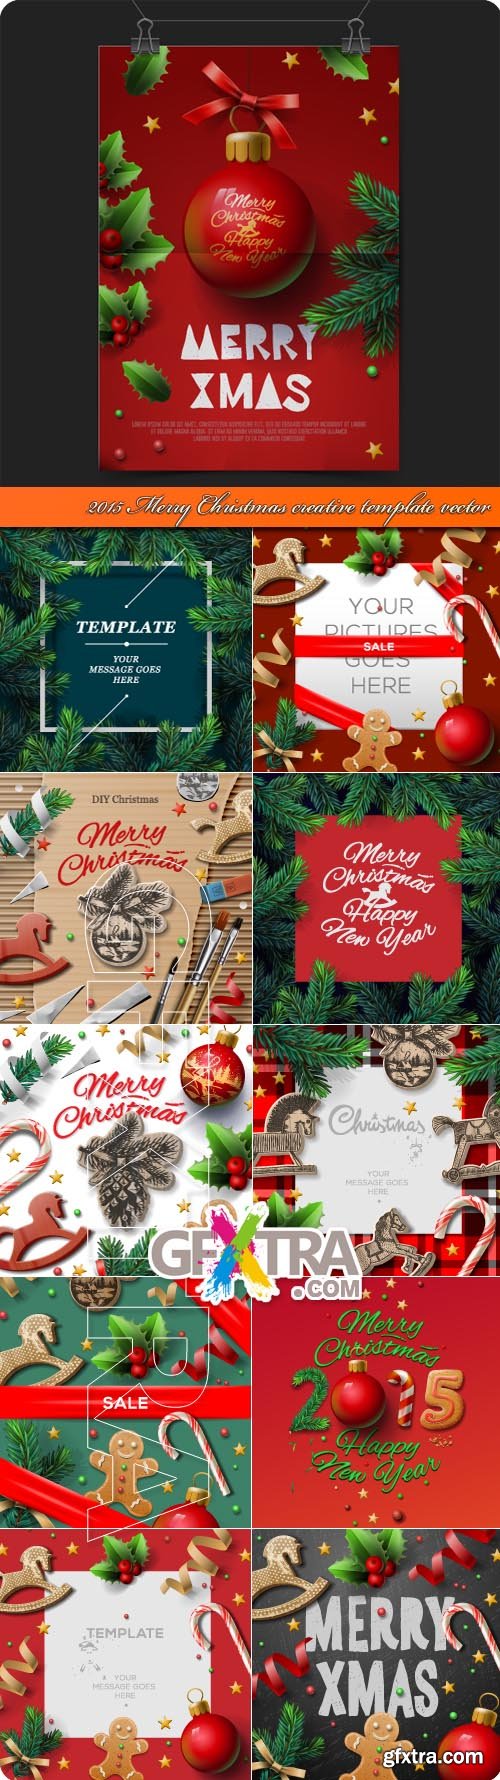 2015 Merry Christmas creative template vector